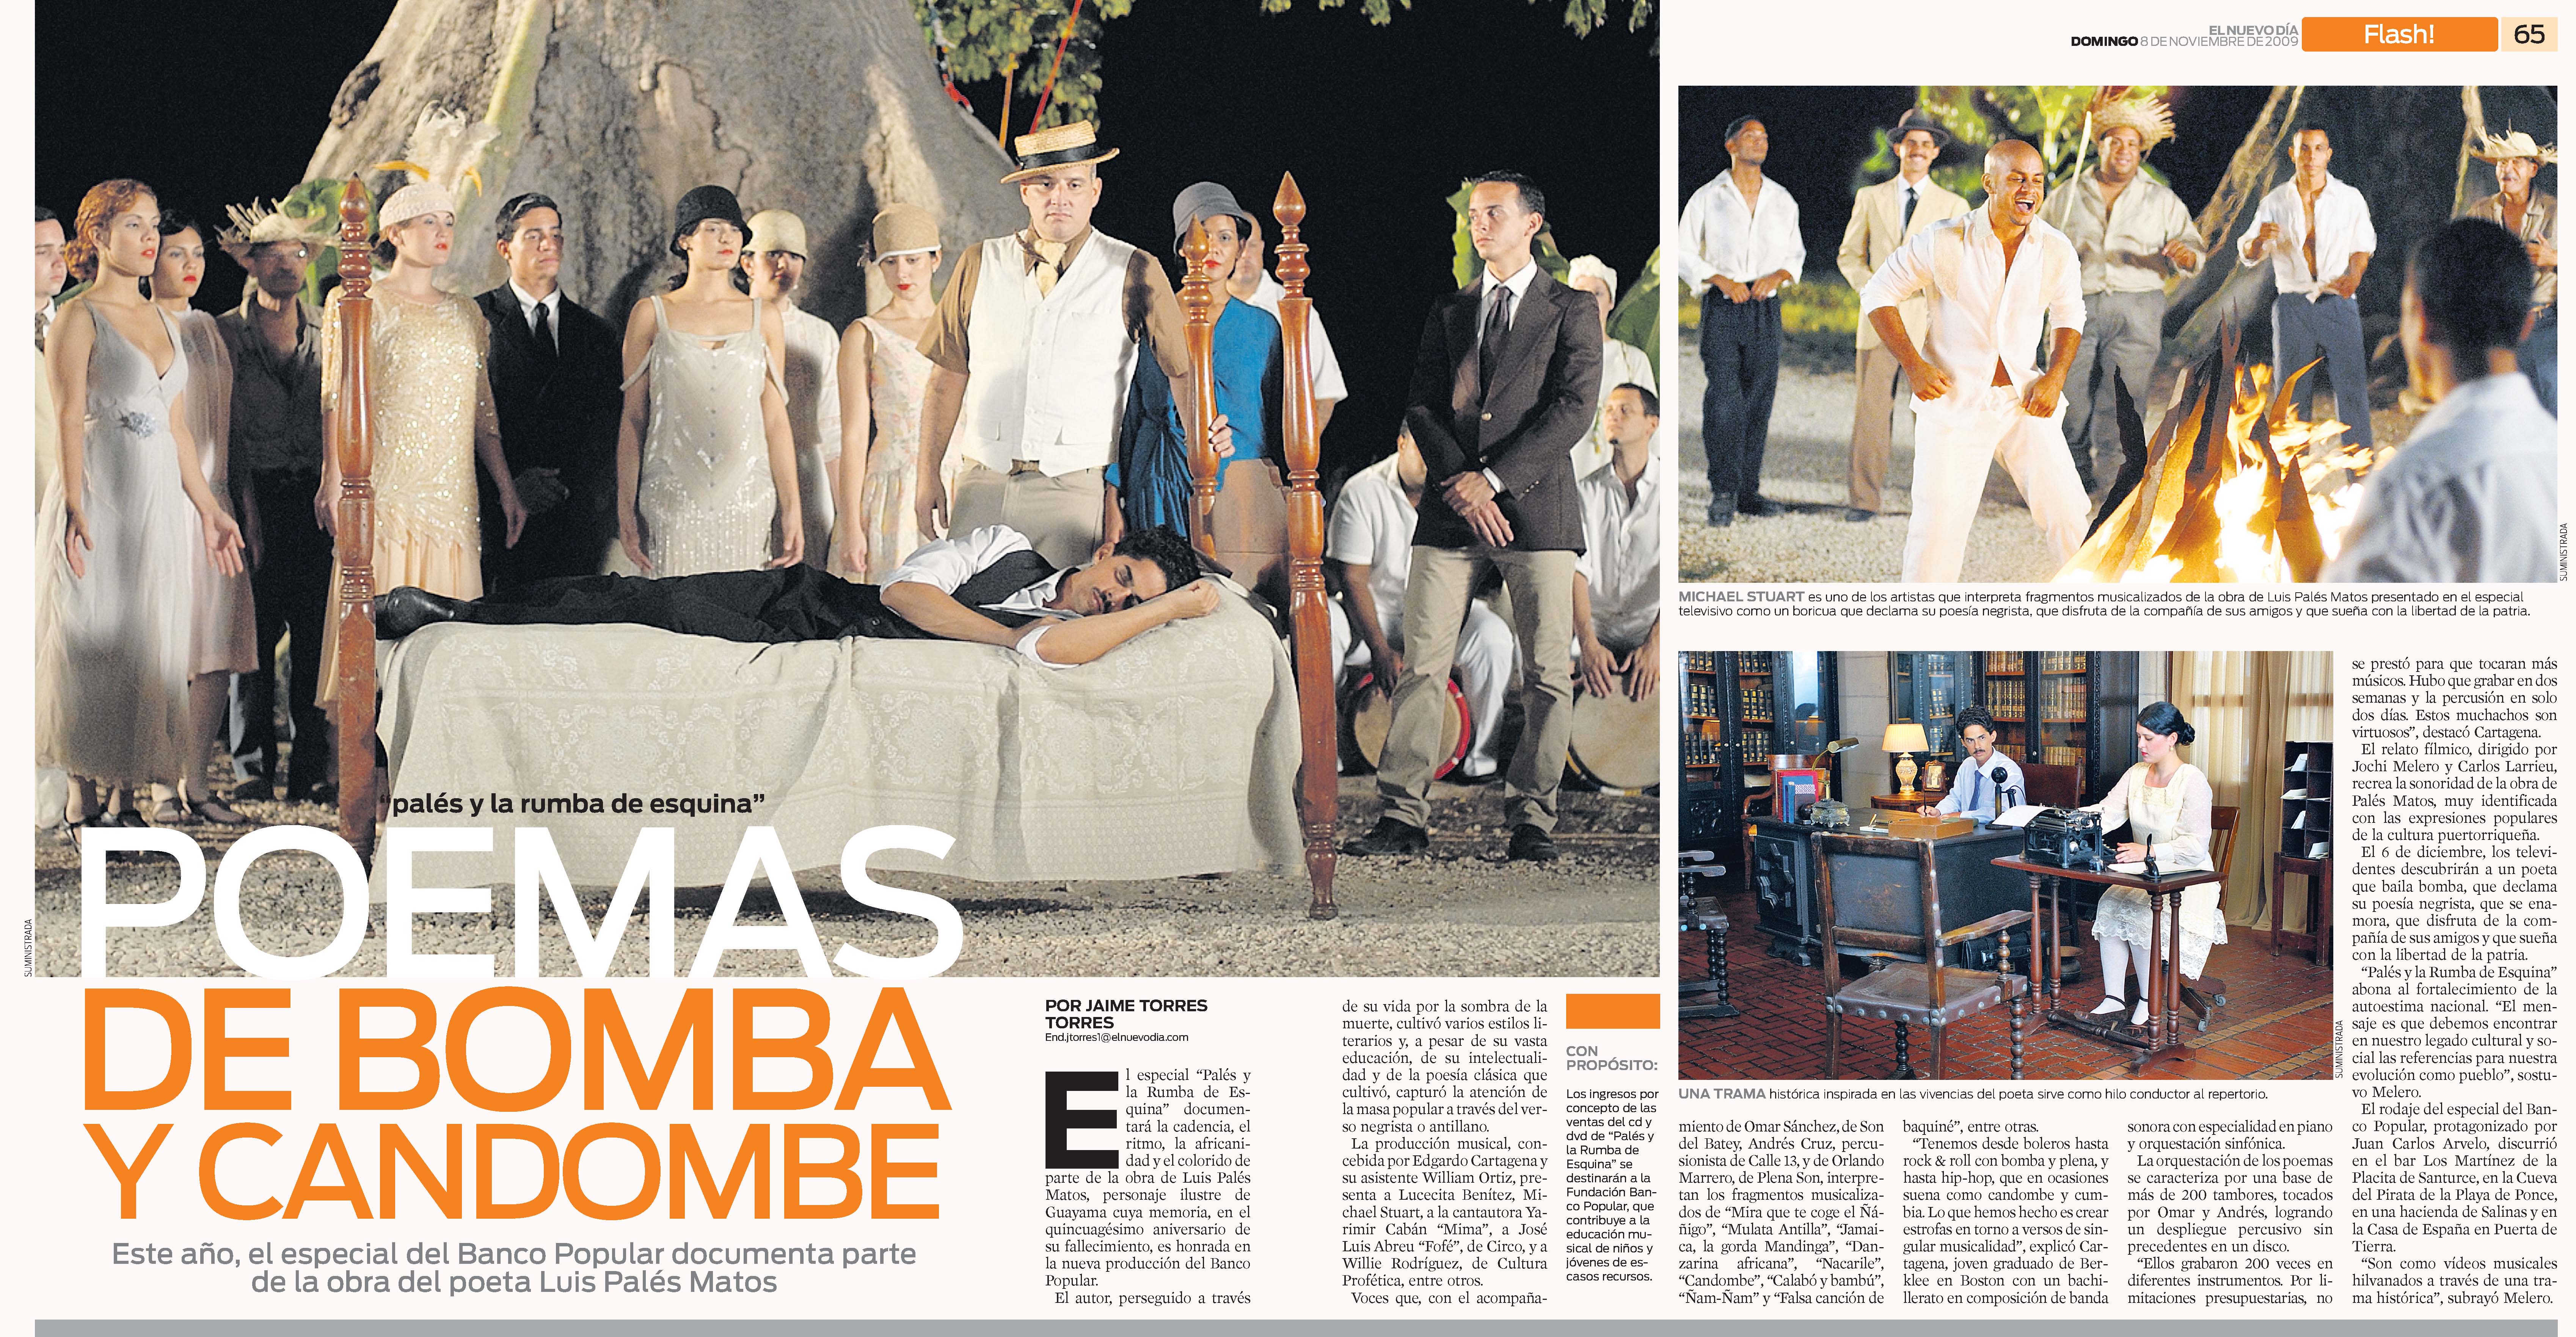 Still shot/article, from the TV special, Pales & la Rumba de Esquina.